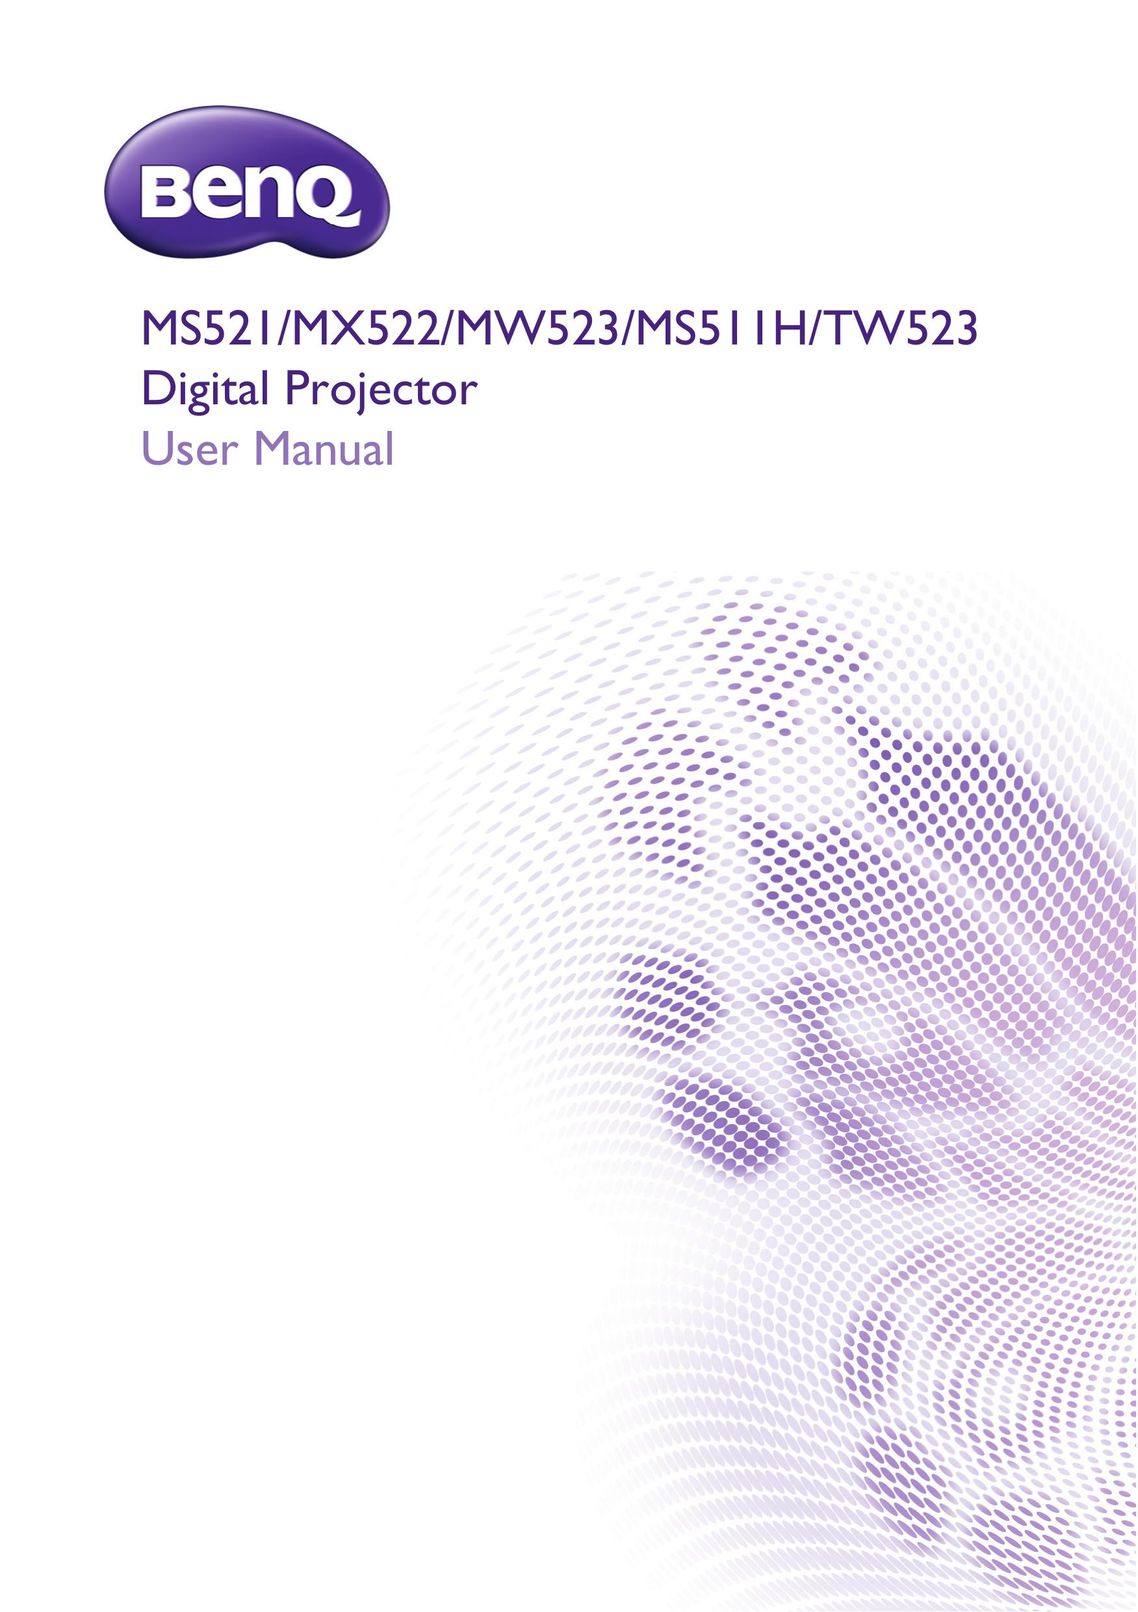 BenQ MS521 Projector User Manual